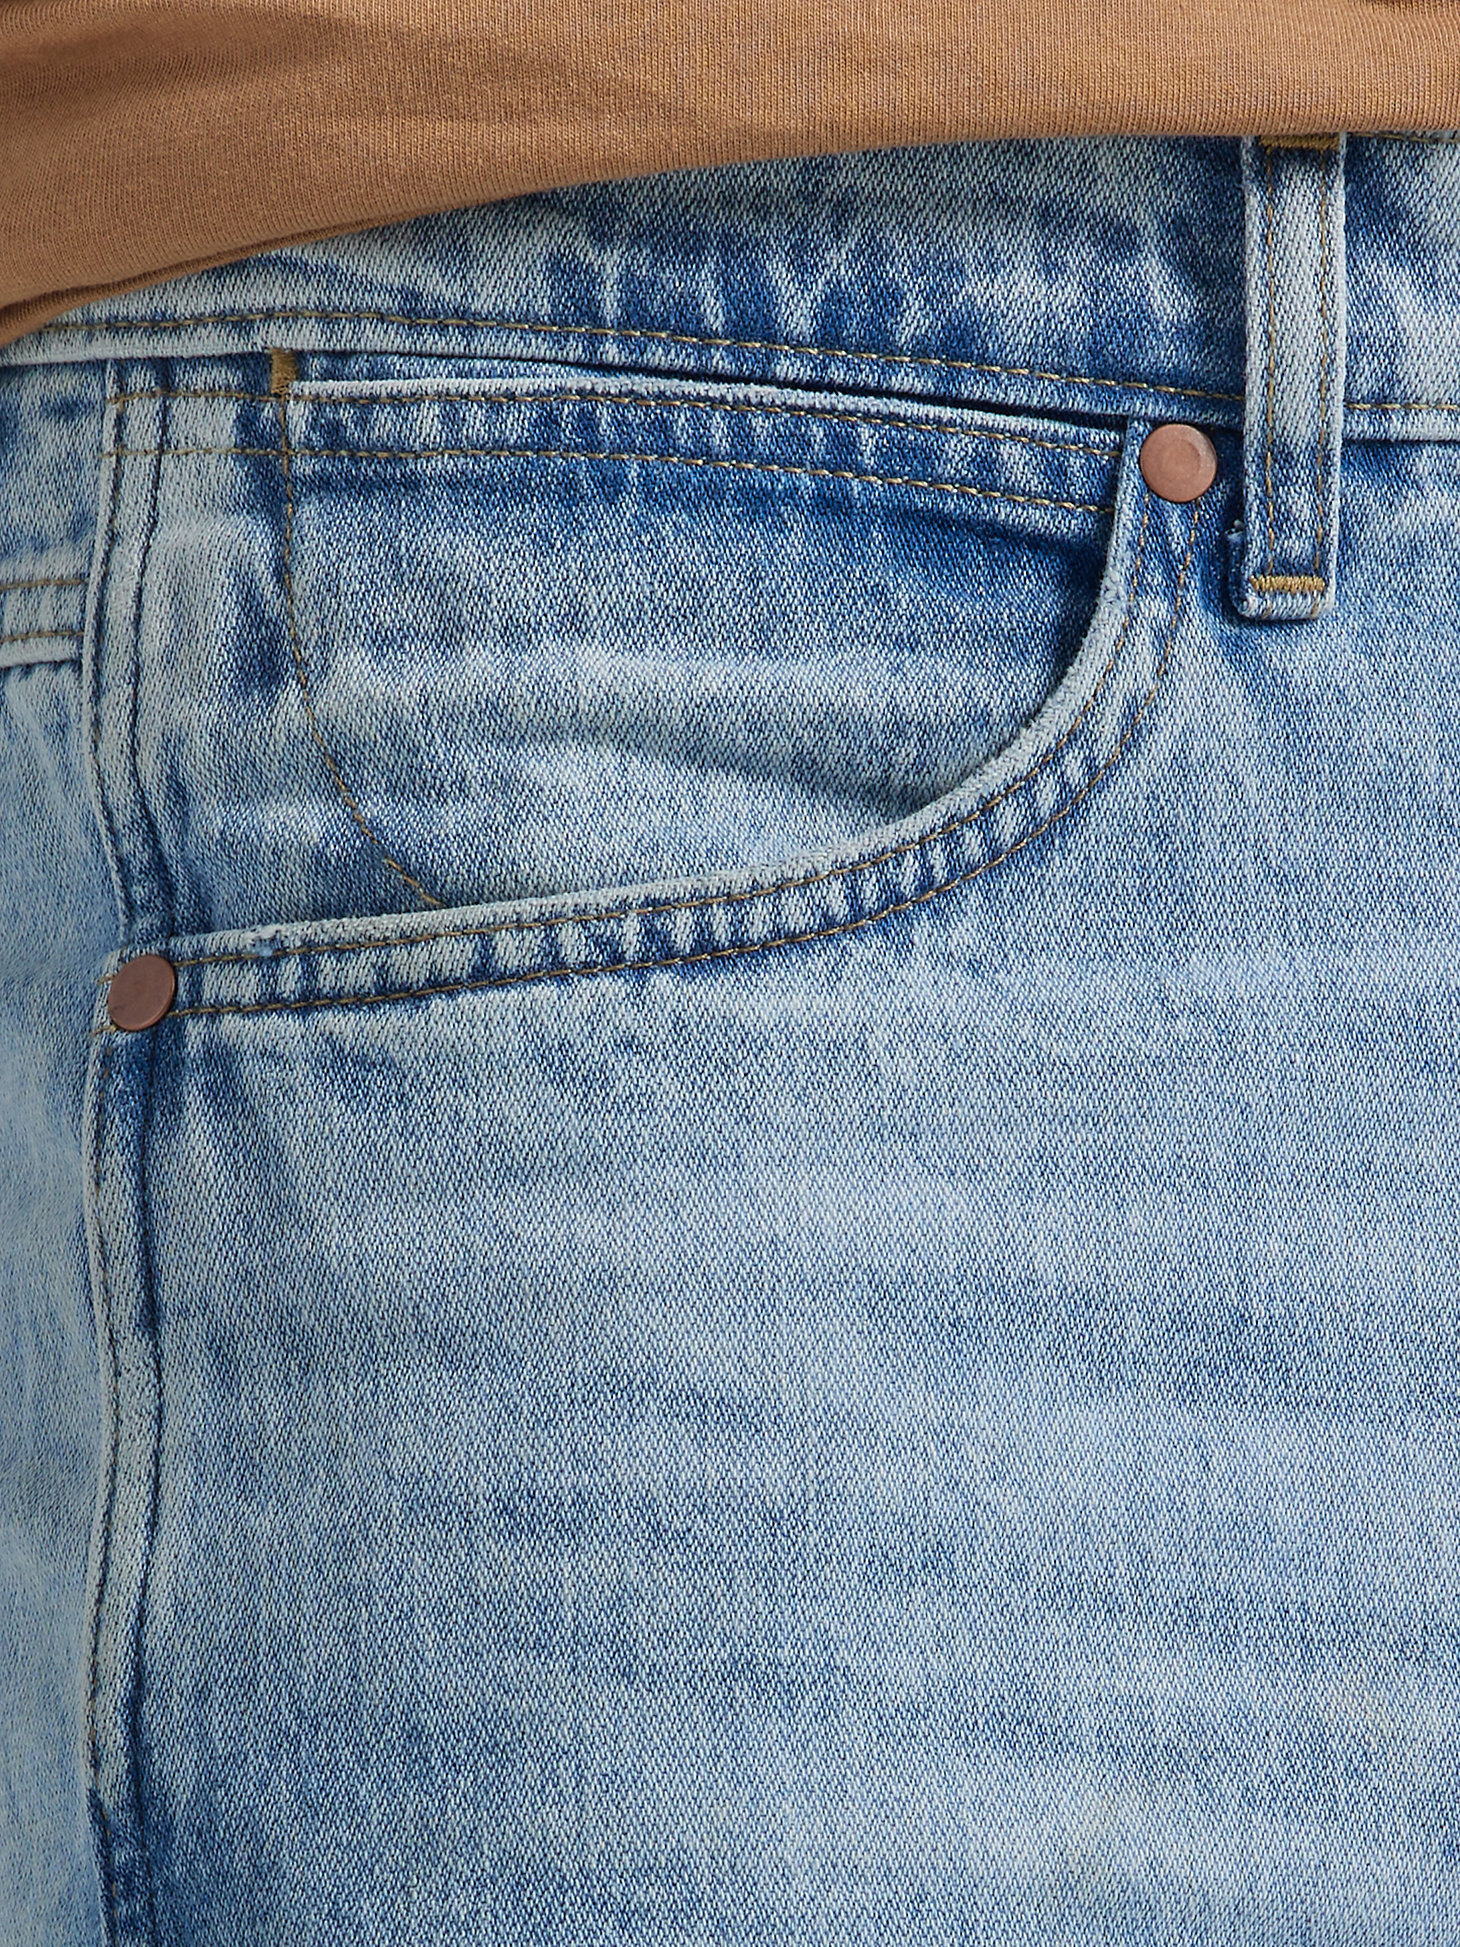 Men's Wrangler® Heritage Redding Loose Fit Jean in Ripped Light Wash alternative view 5